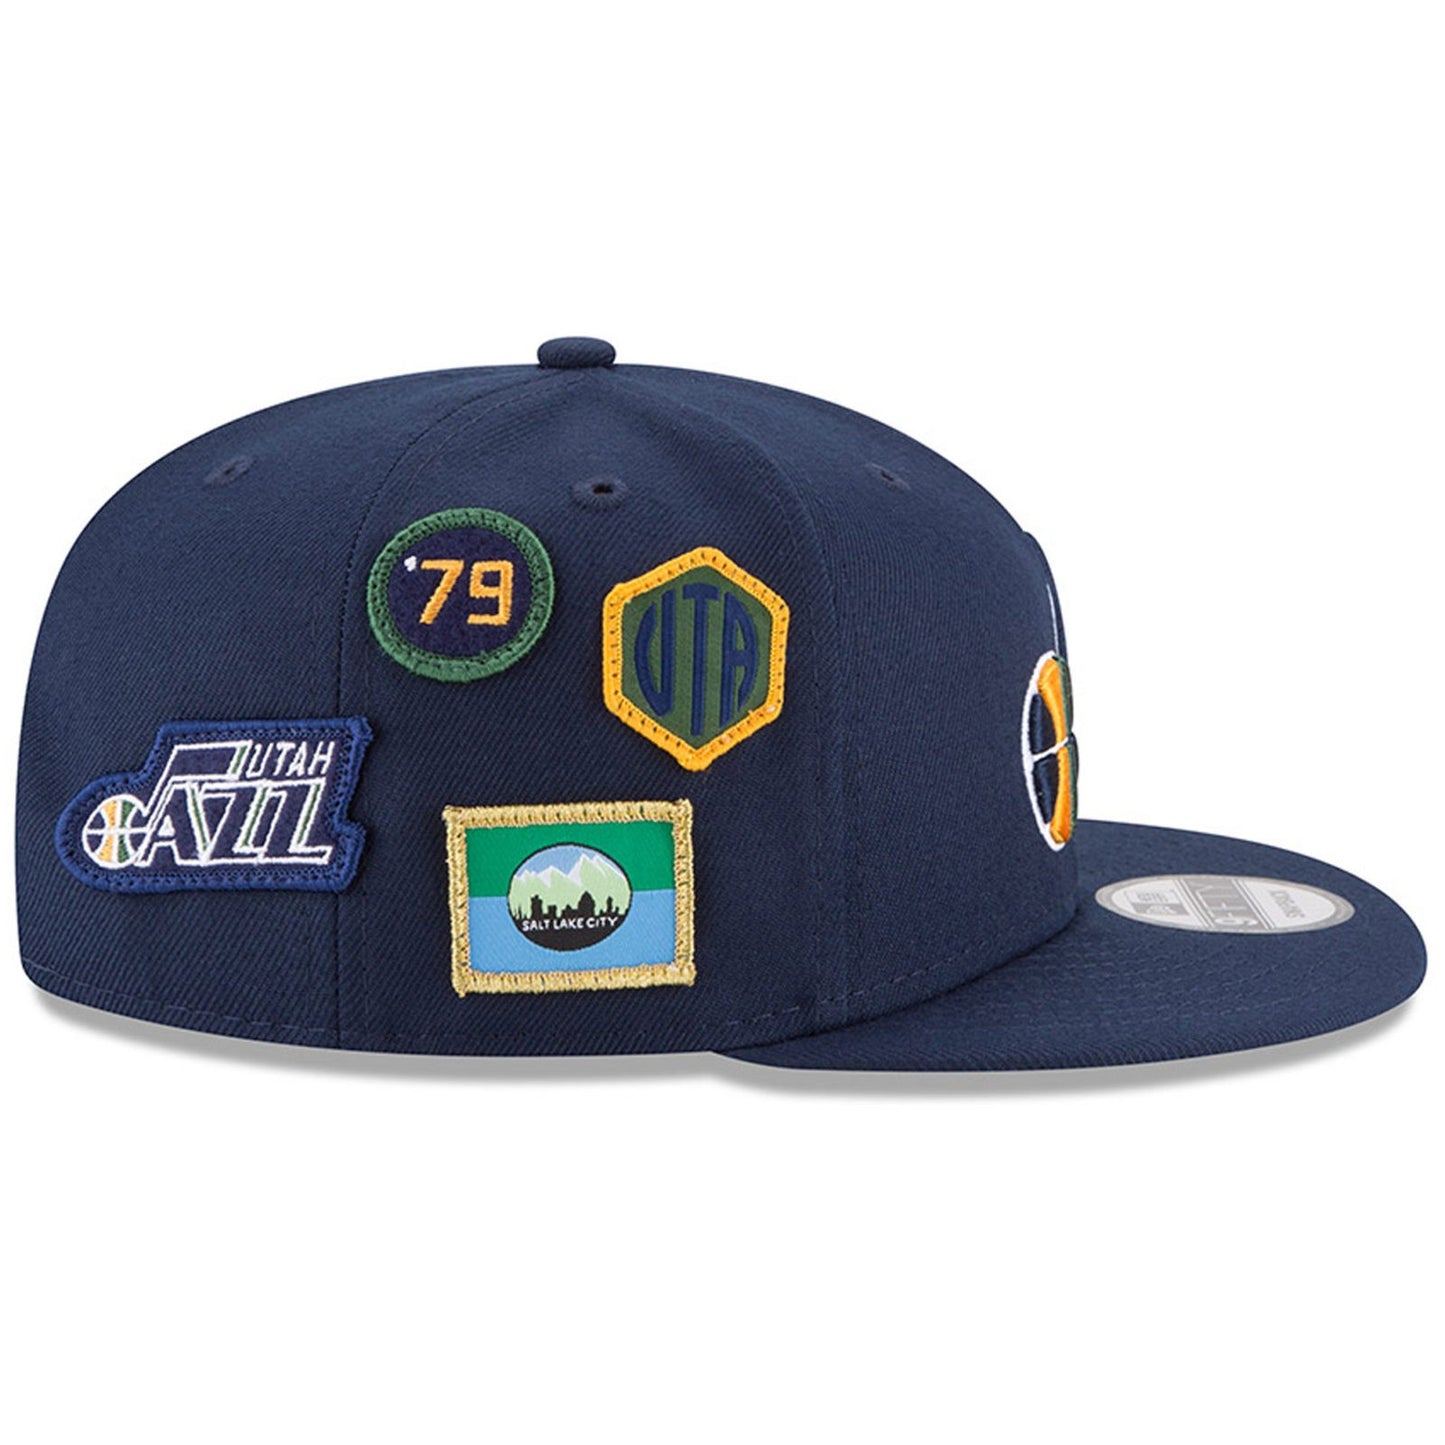 Utah Jazz New Era 2018 Draft 9FIFTY Snapback Adjustable Hat – Navy